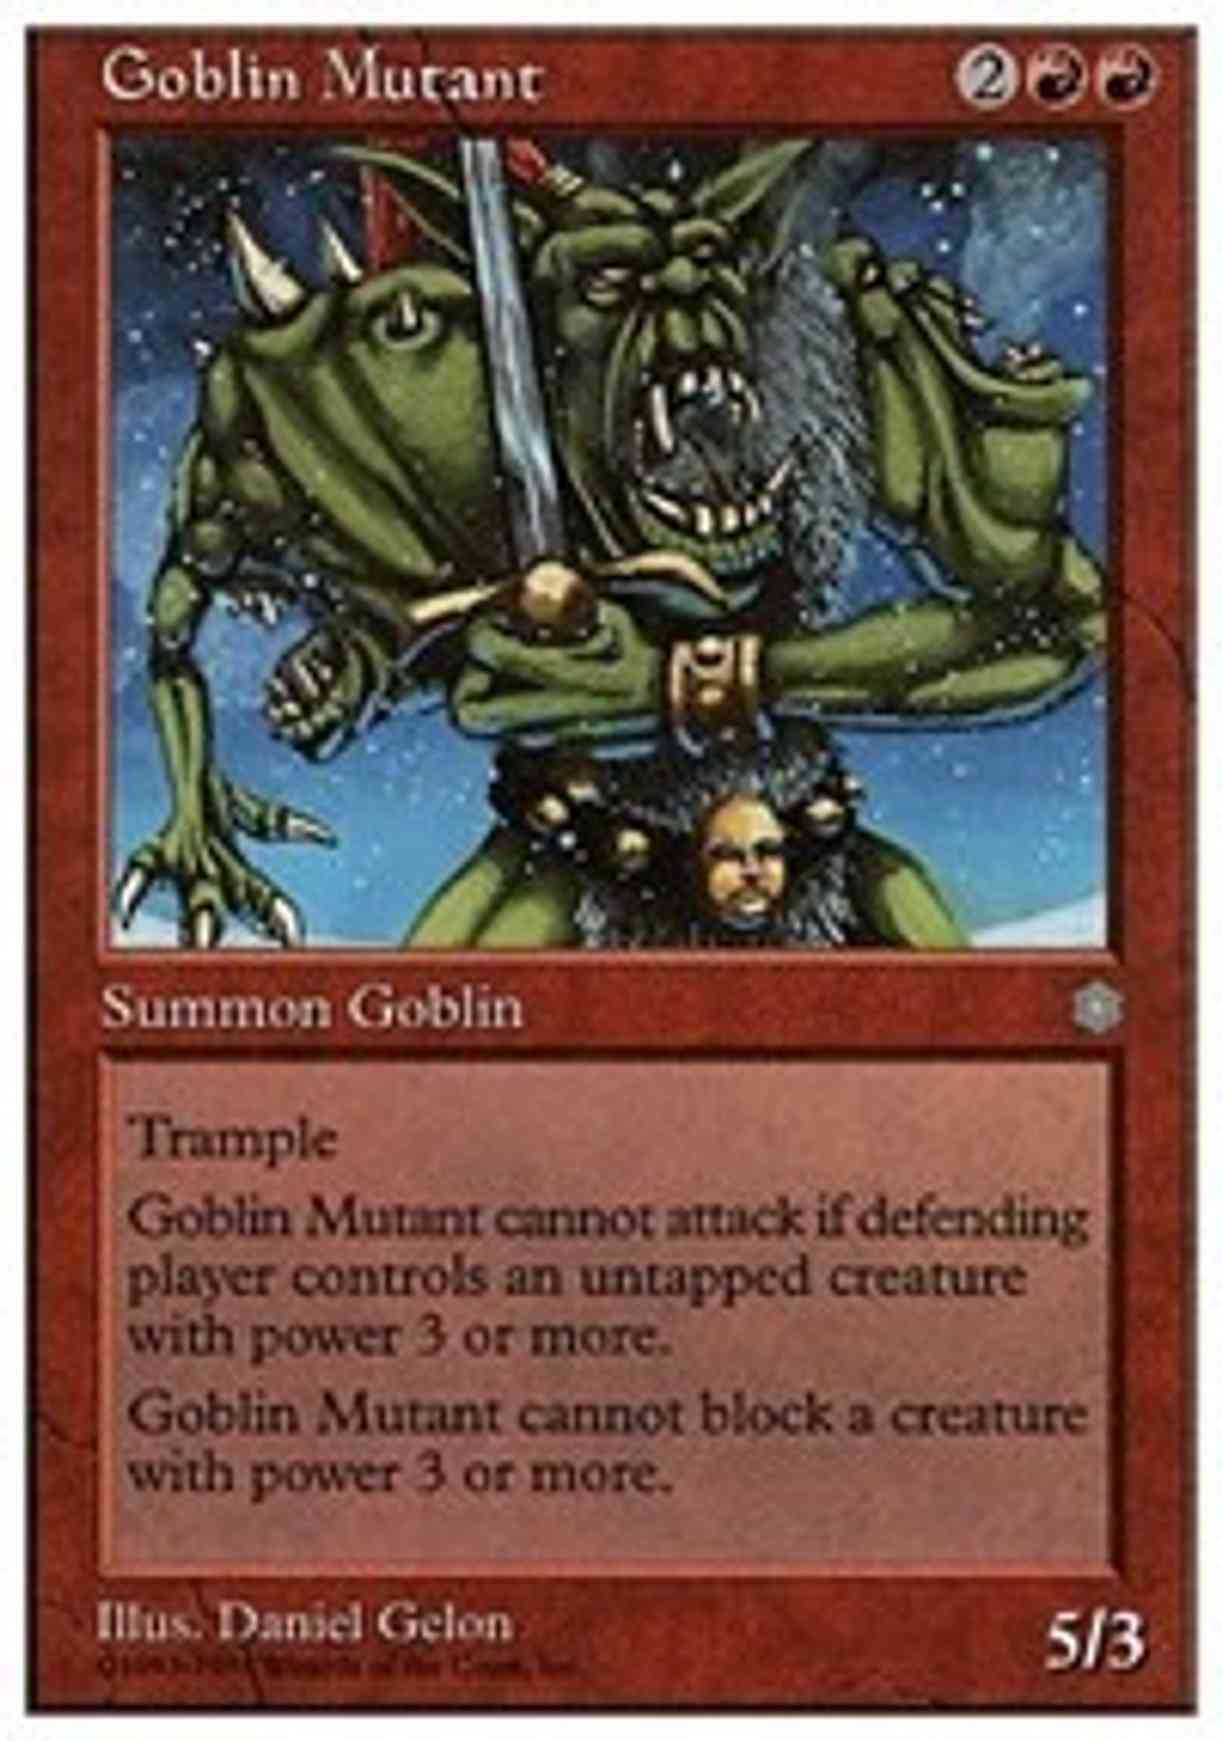 Goblin Mutant magic card front